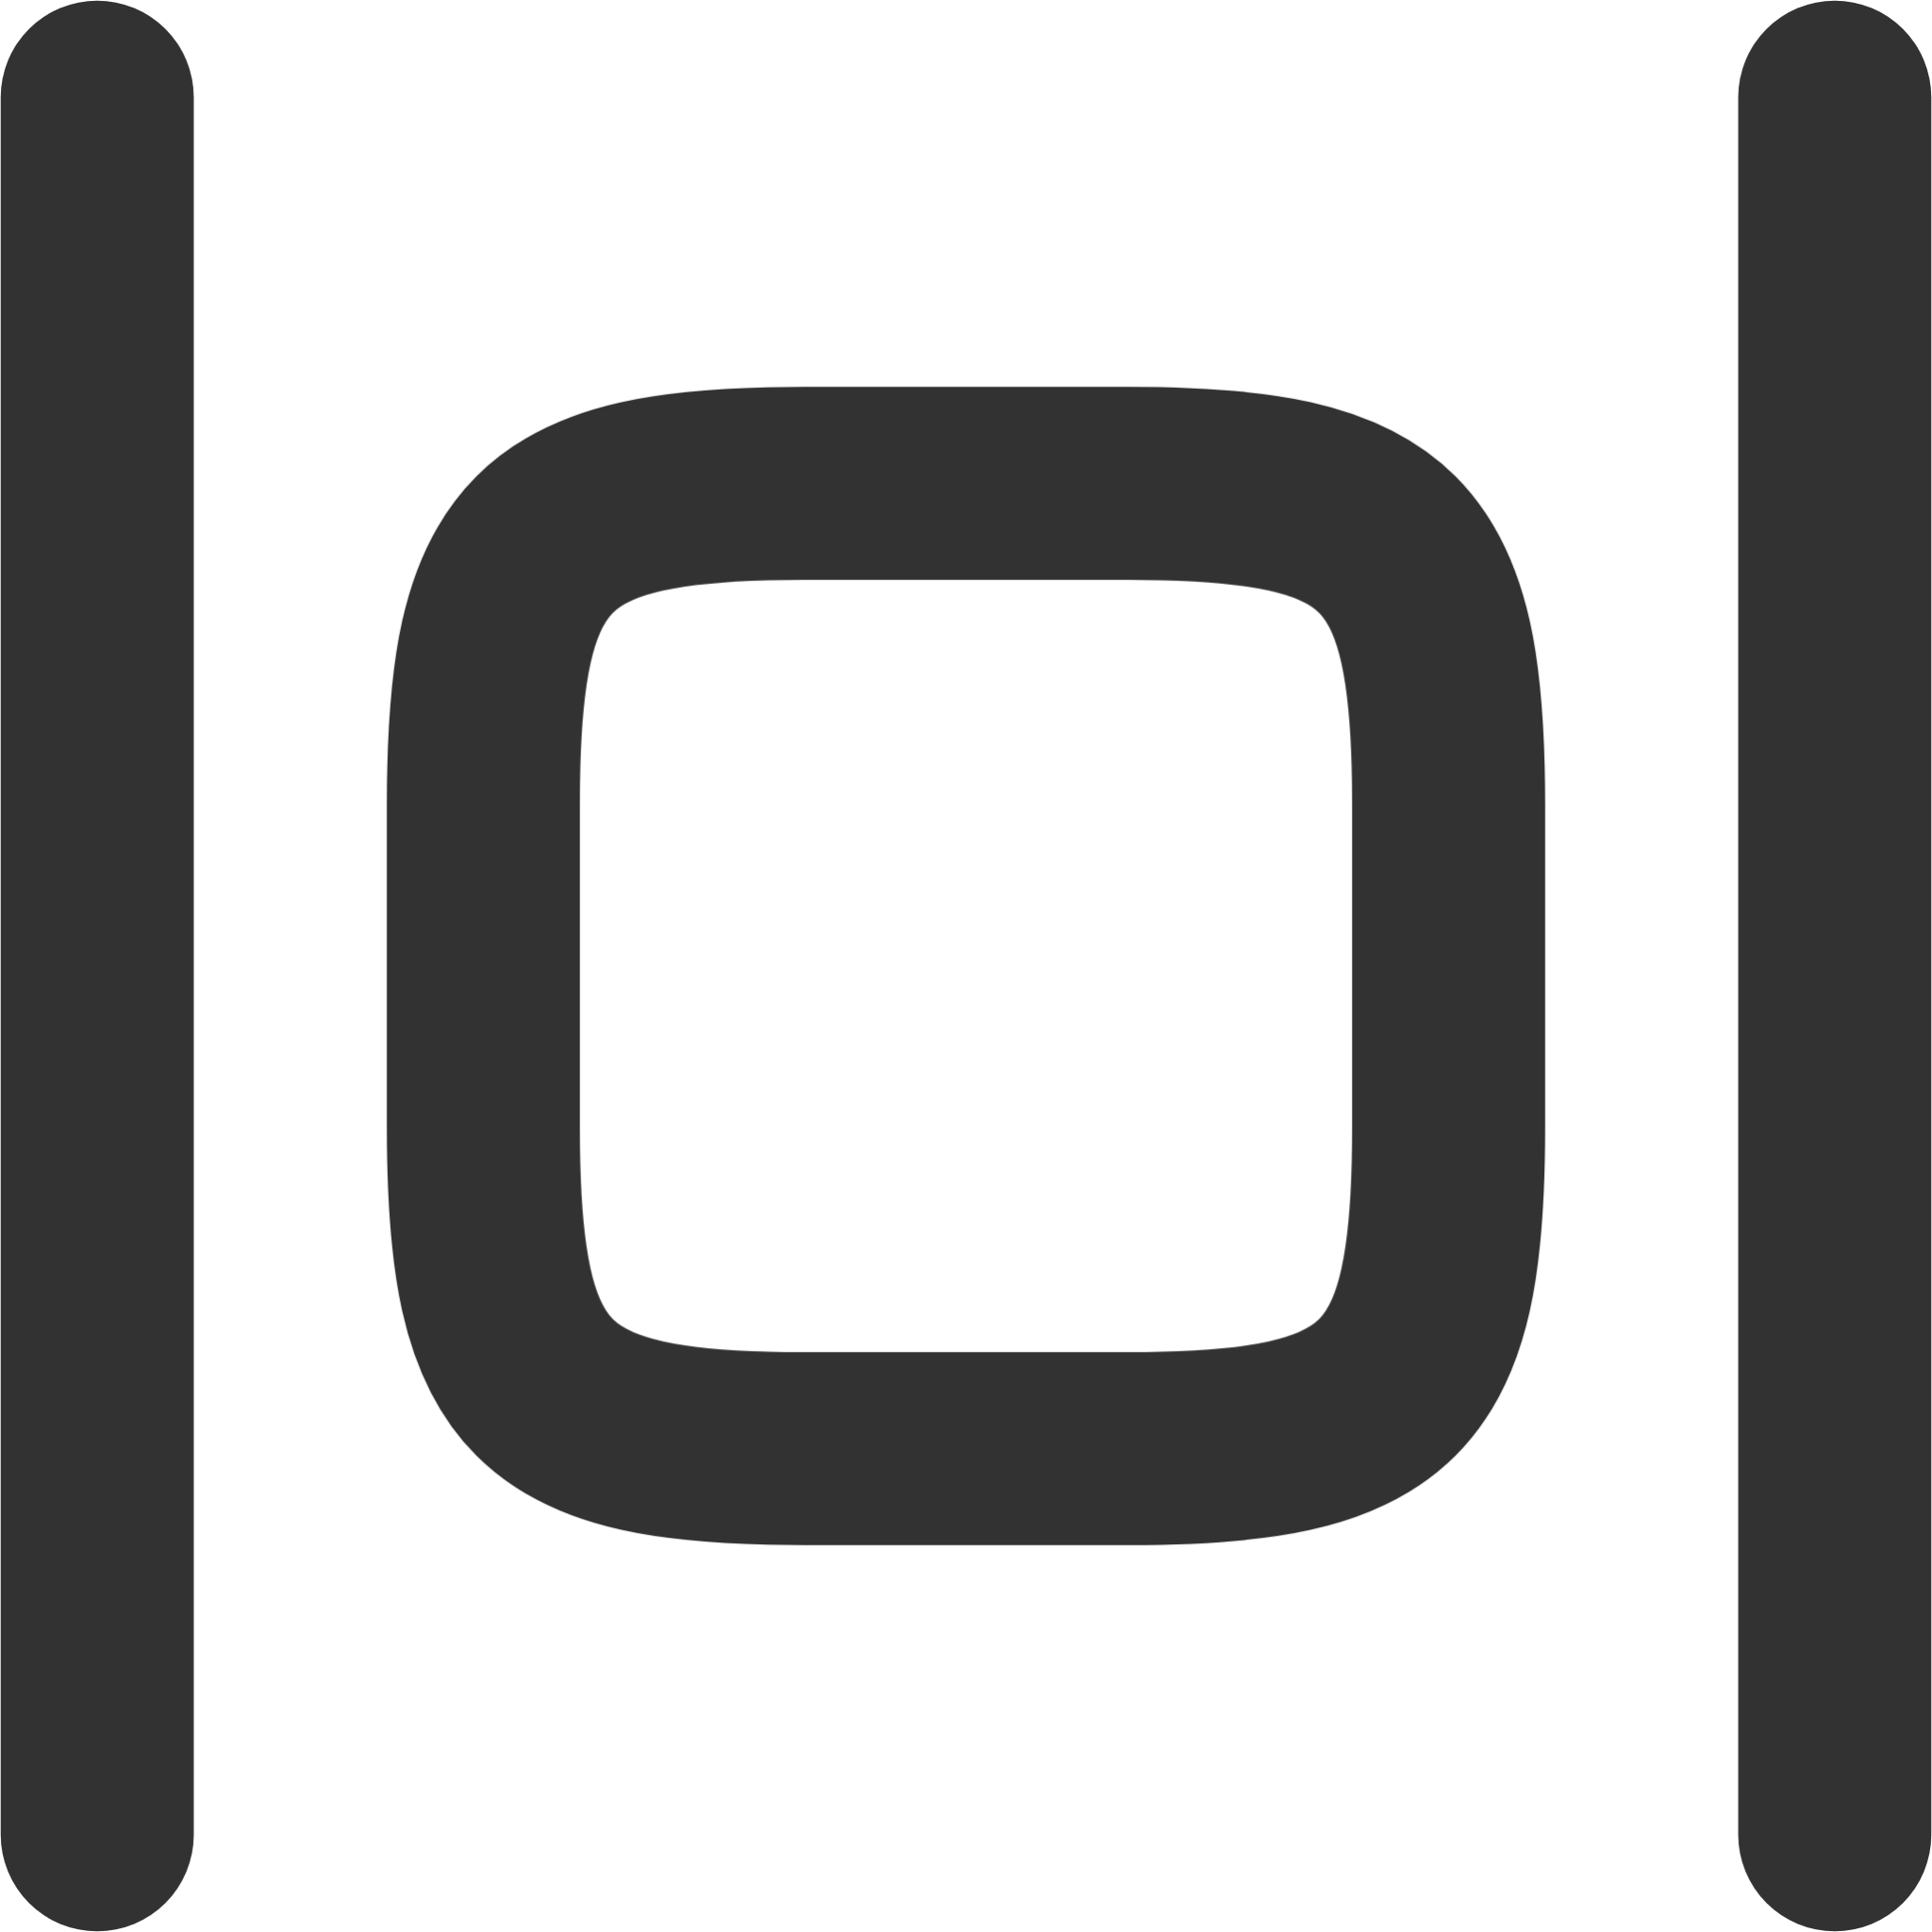 align horizontal center icon